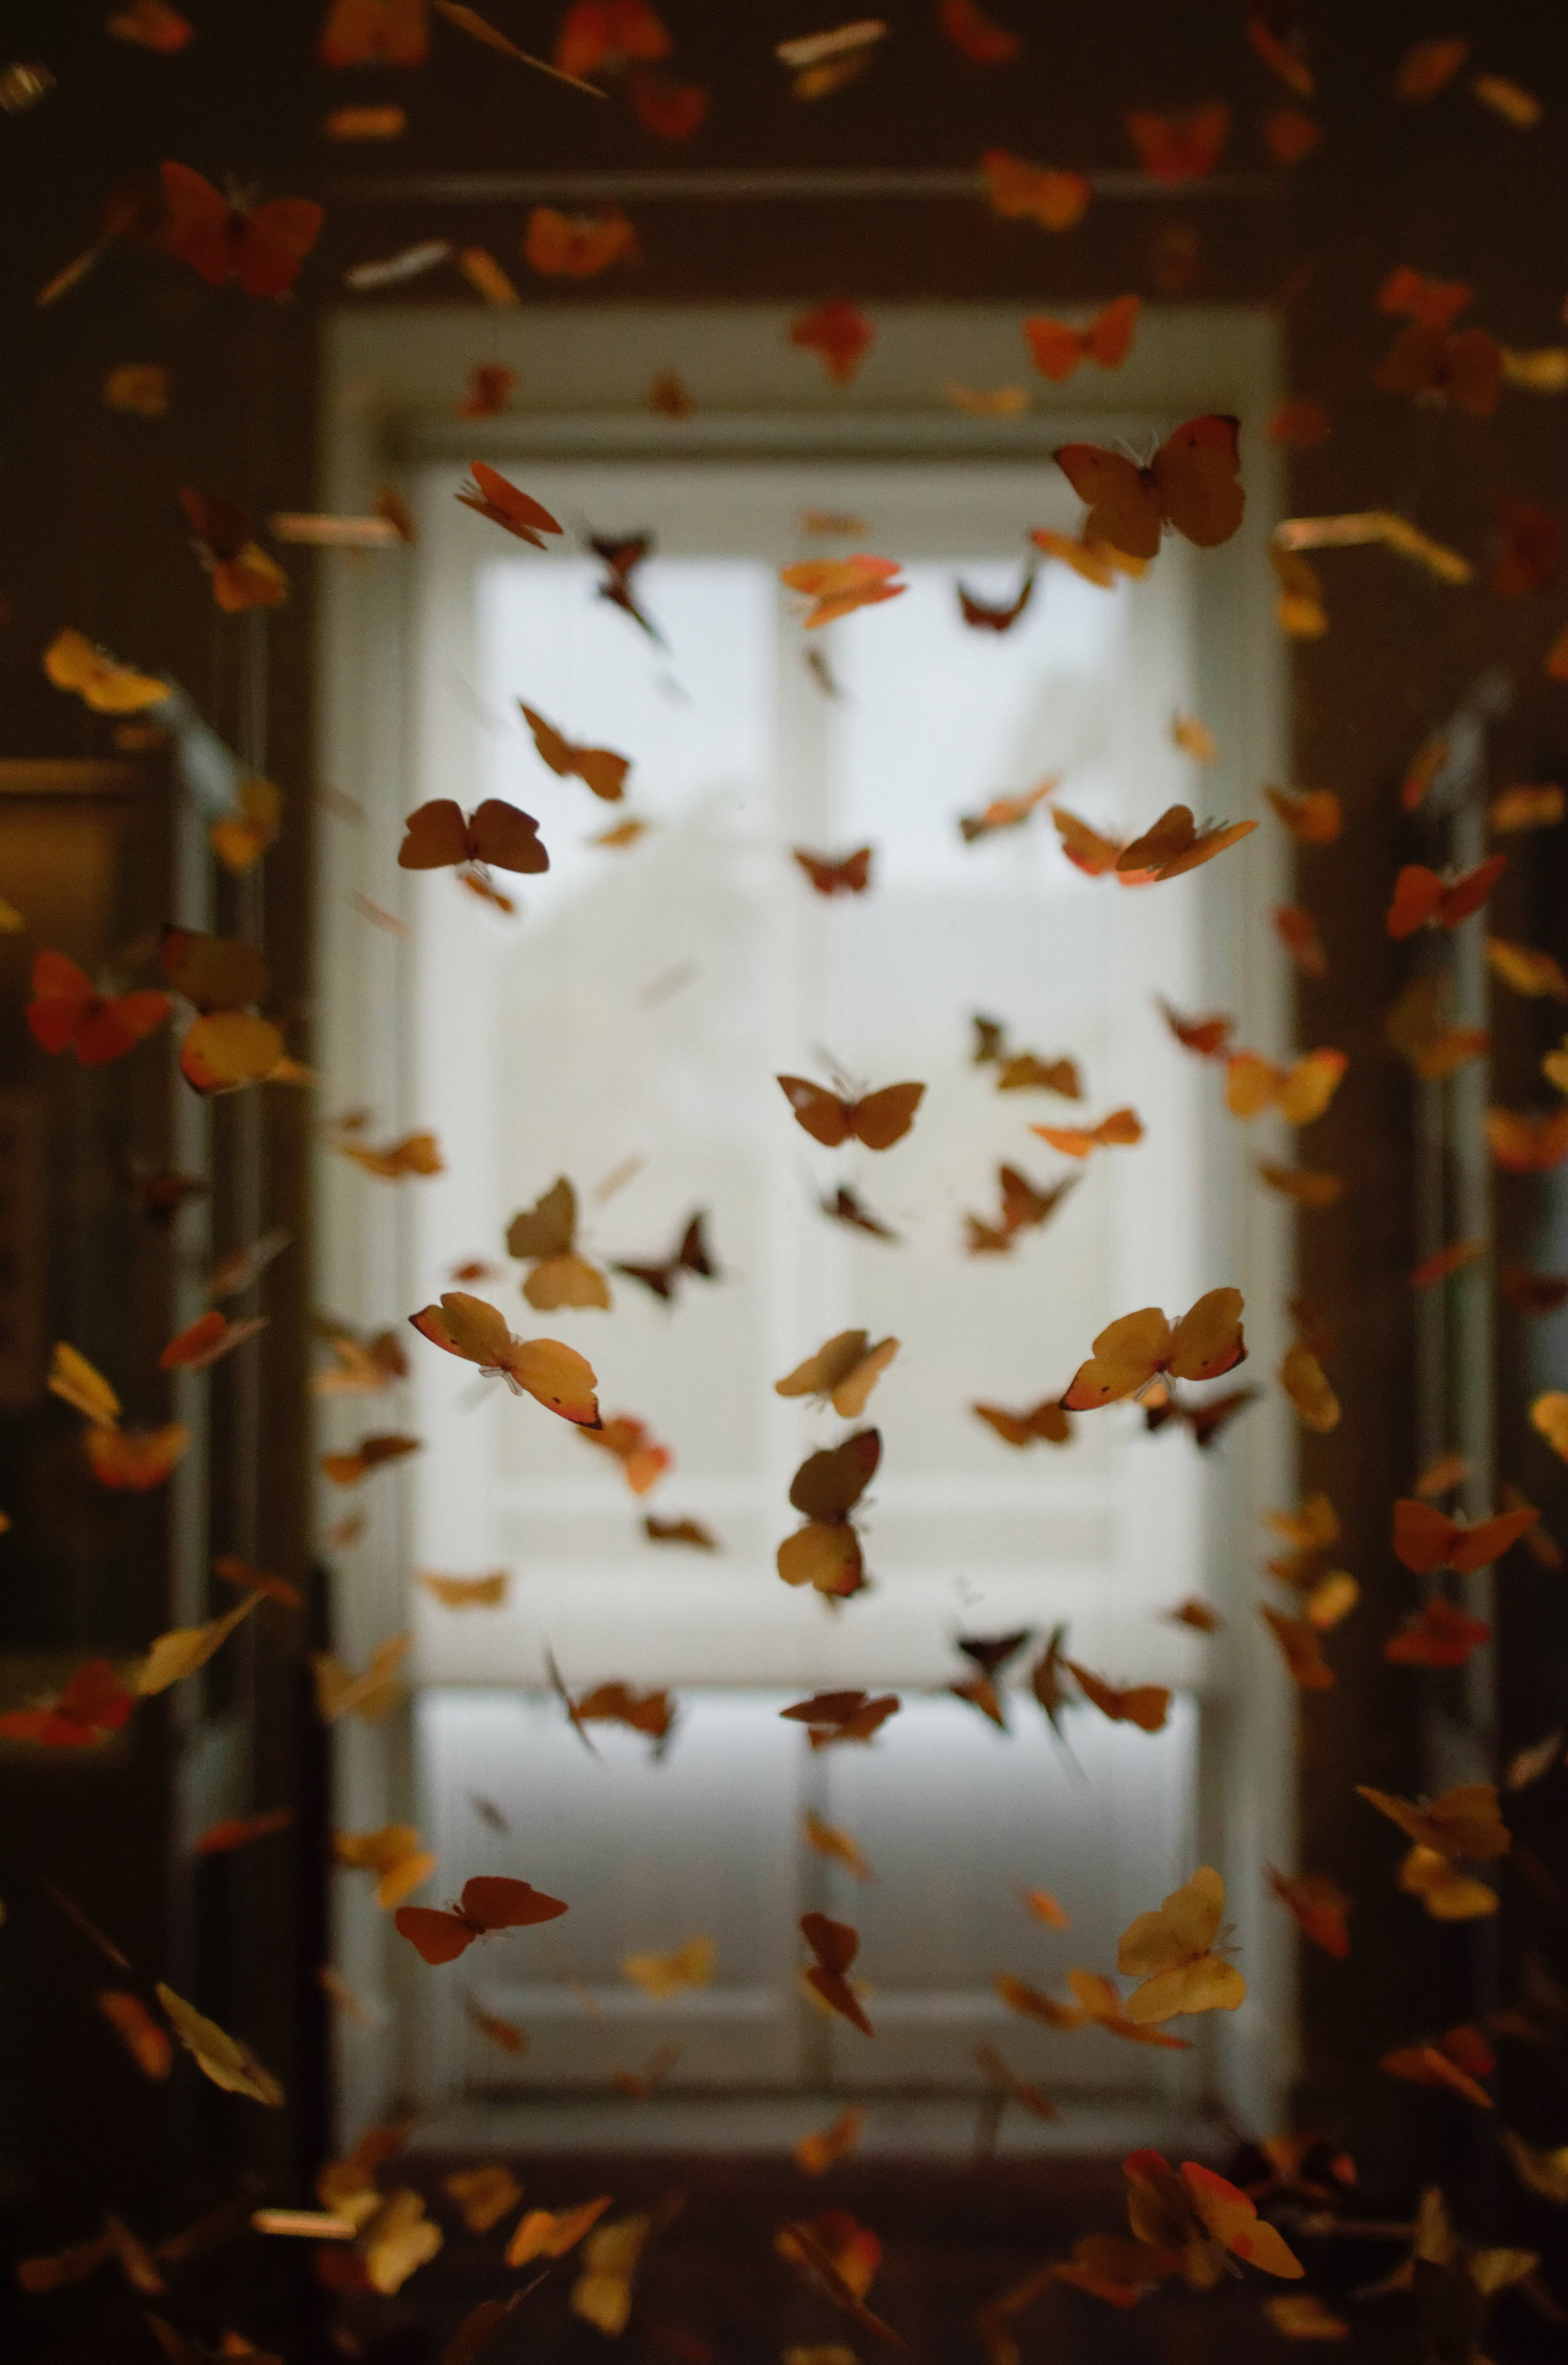 Aesthetic Orange Butterfly Flying Indoors Wallpaper